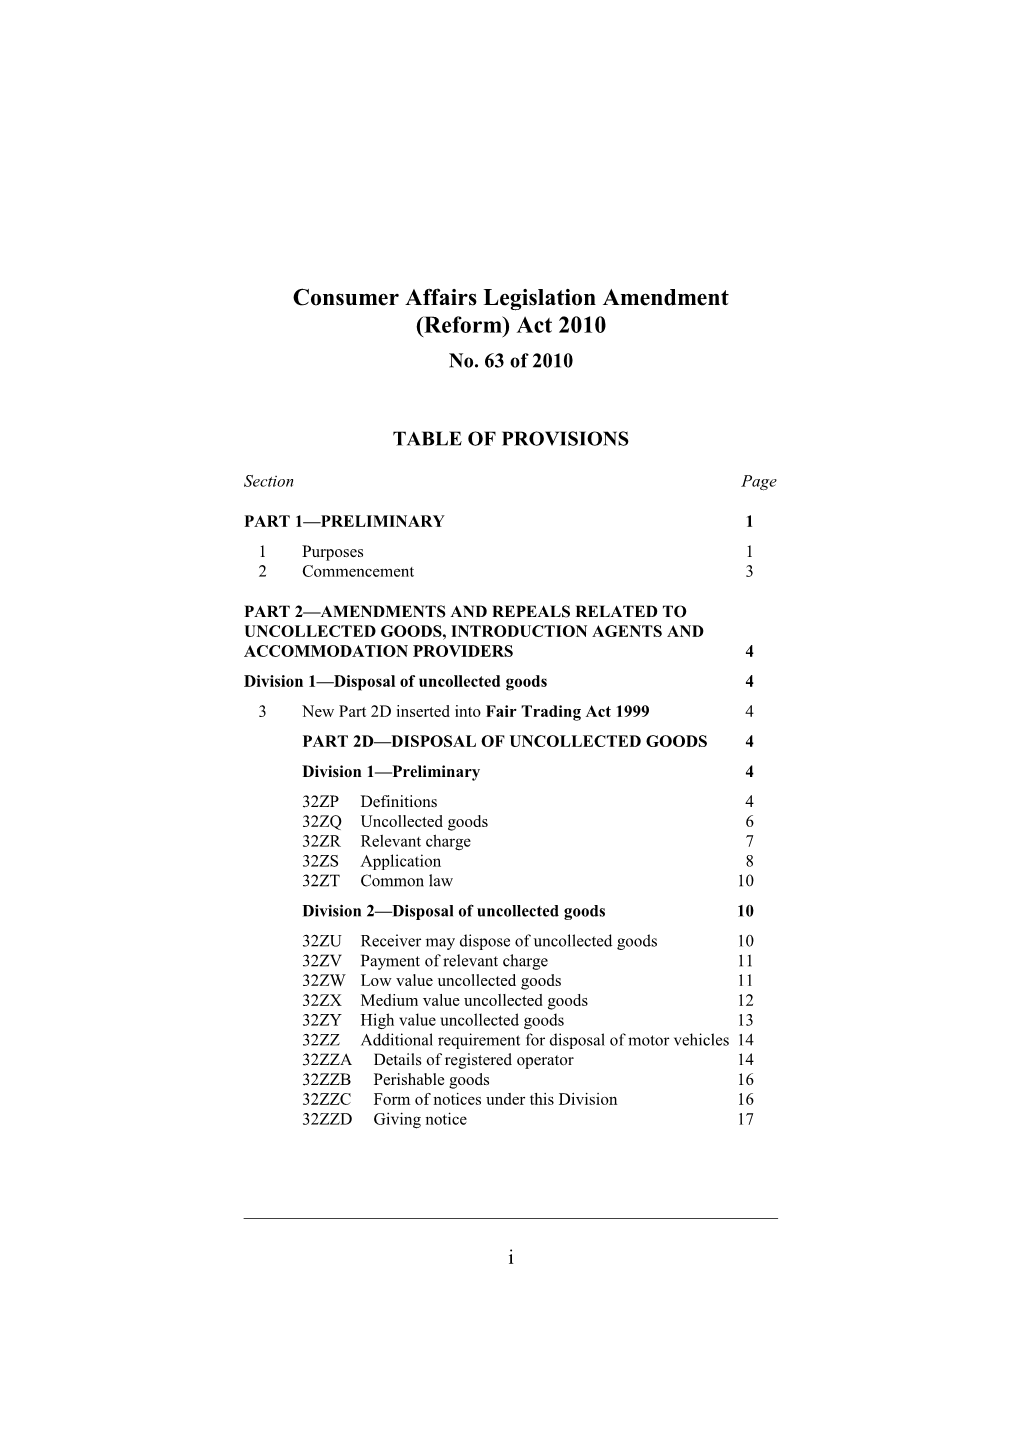 Consumer Affairs Legislation Amendment (Reform) Act 2010